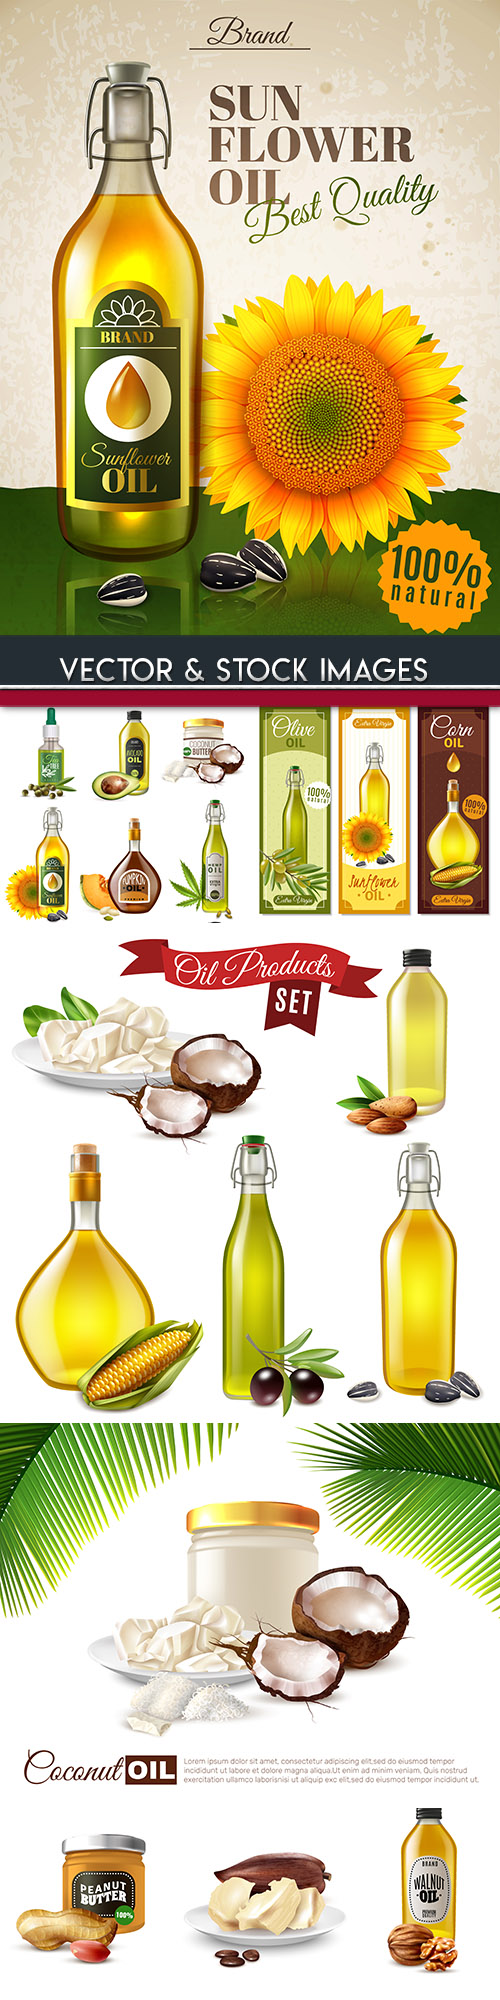 Bottle olive almond and coconut oil for proper nutrition